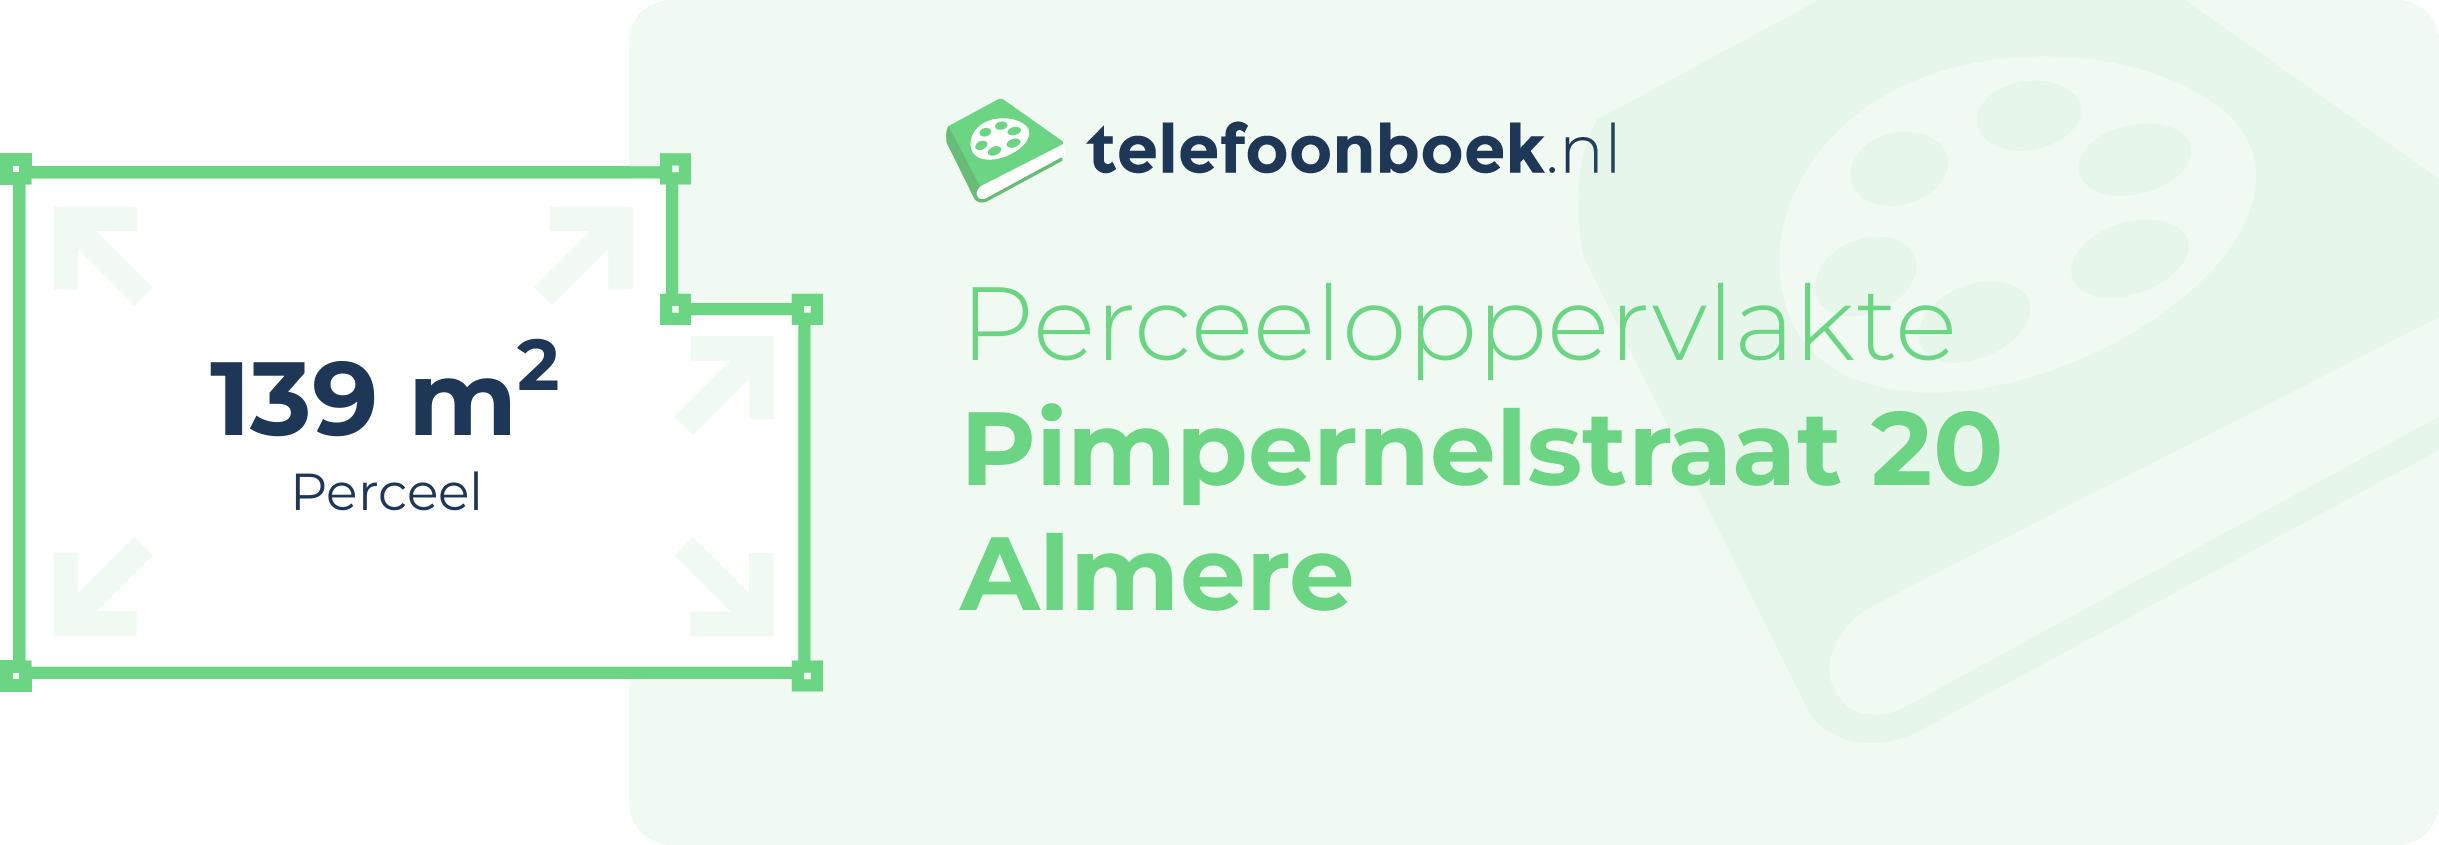 Perceeloppervlakte Pimpernelstraat 20 Almere